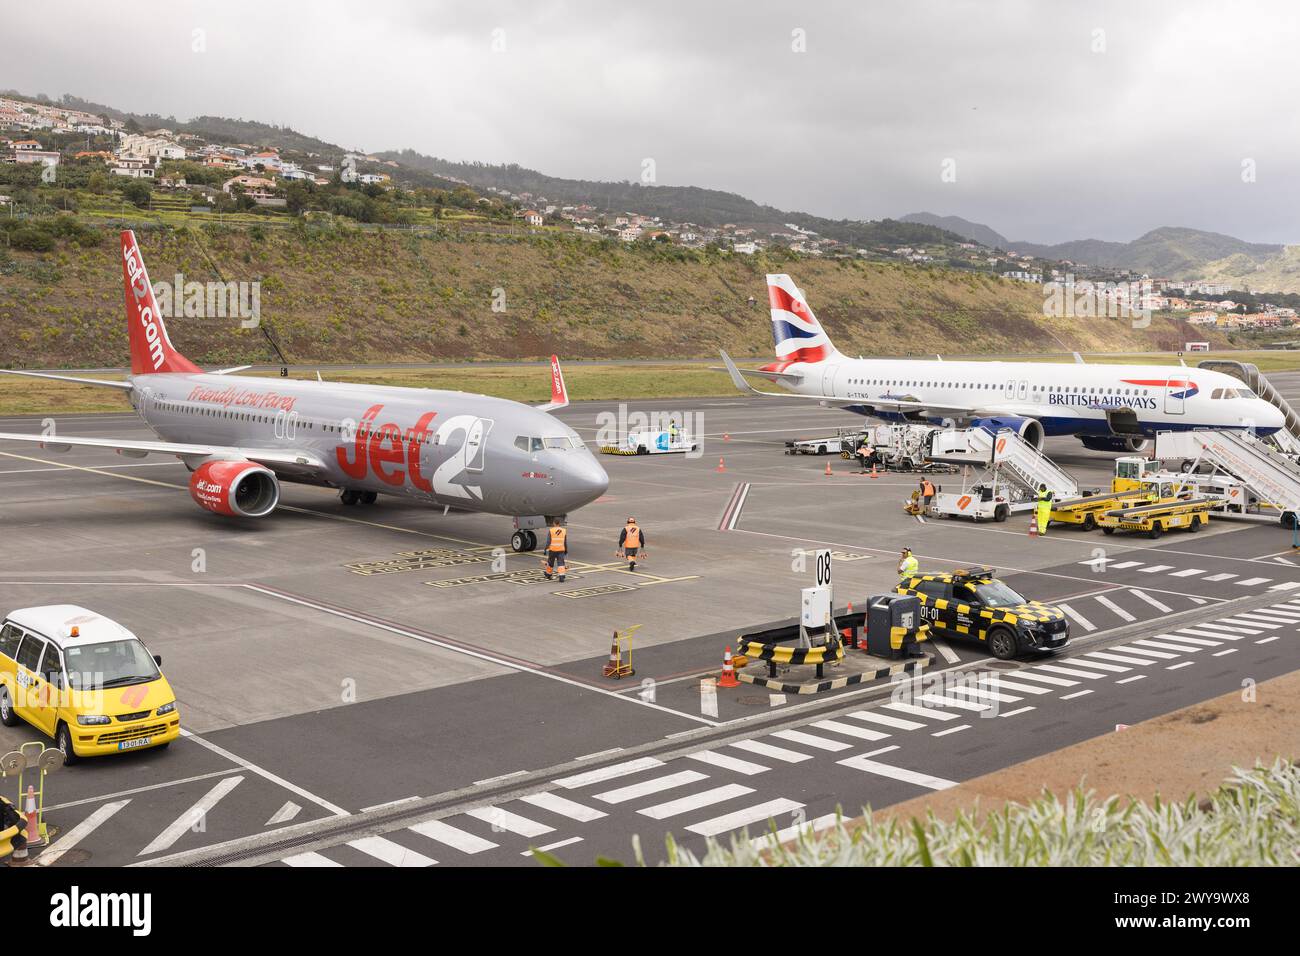 Jet 2 and British Airways passenger aircraft aeroplanes parked at Cristiano Ronaldo International Airport, Funchal, Madeira. Stock Photo